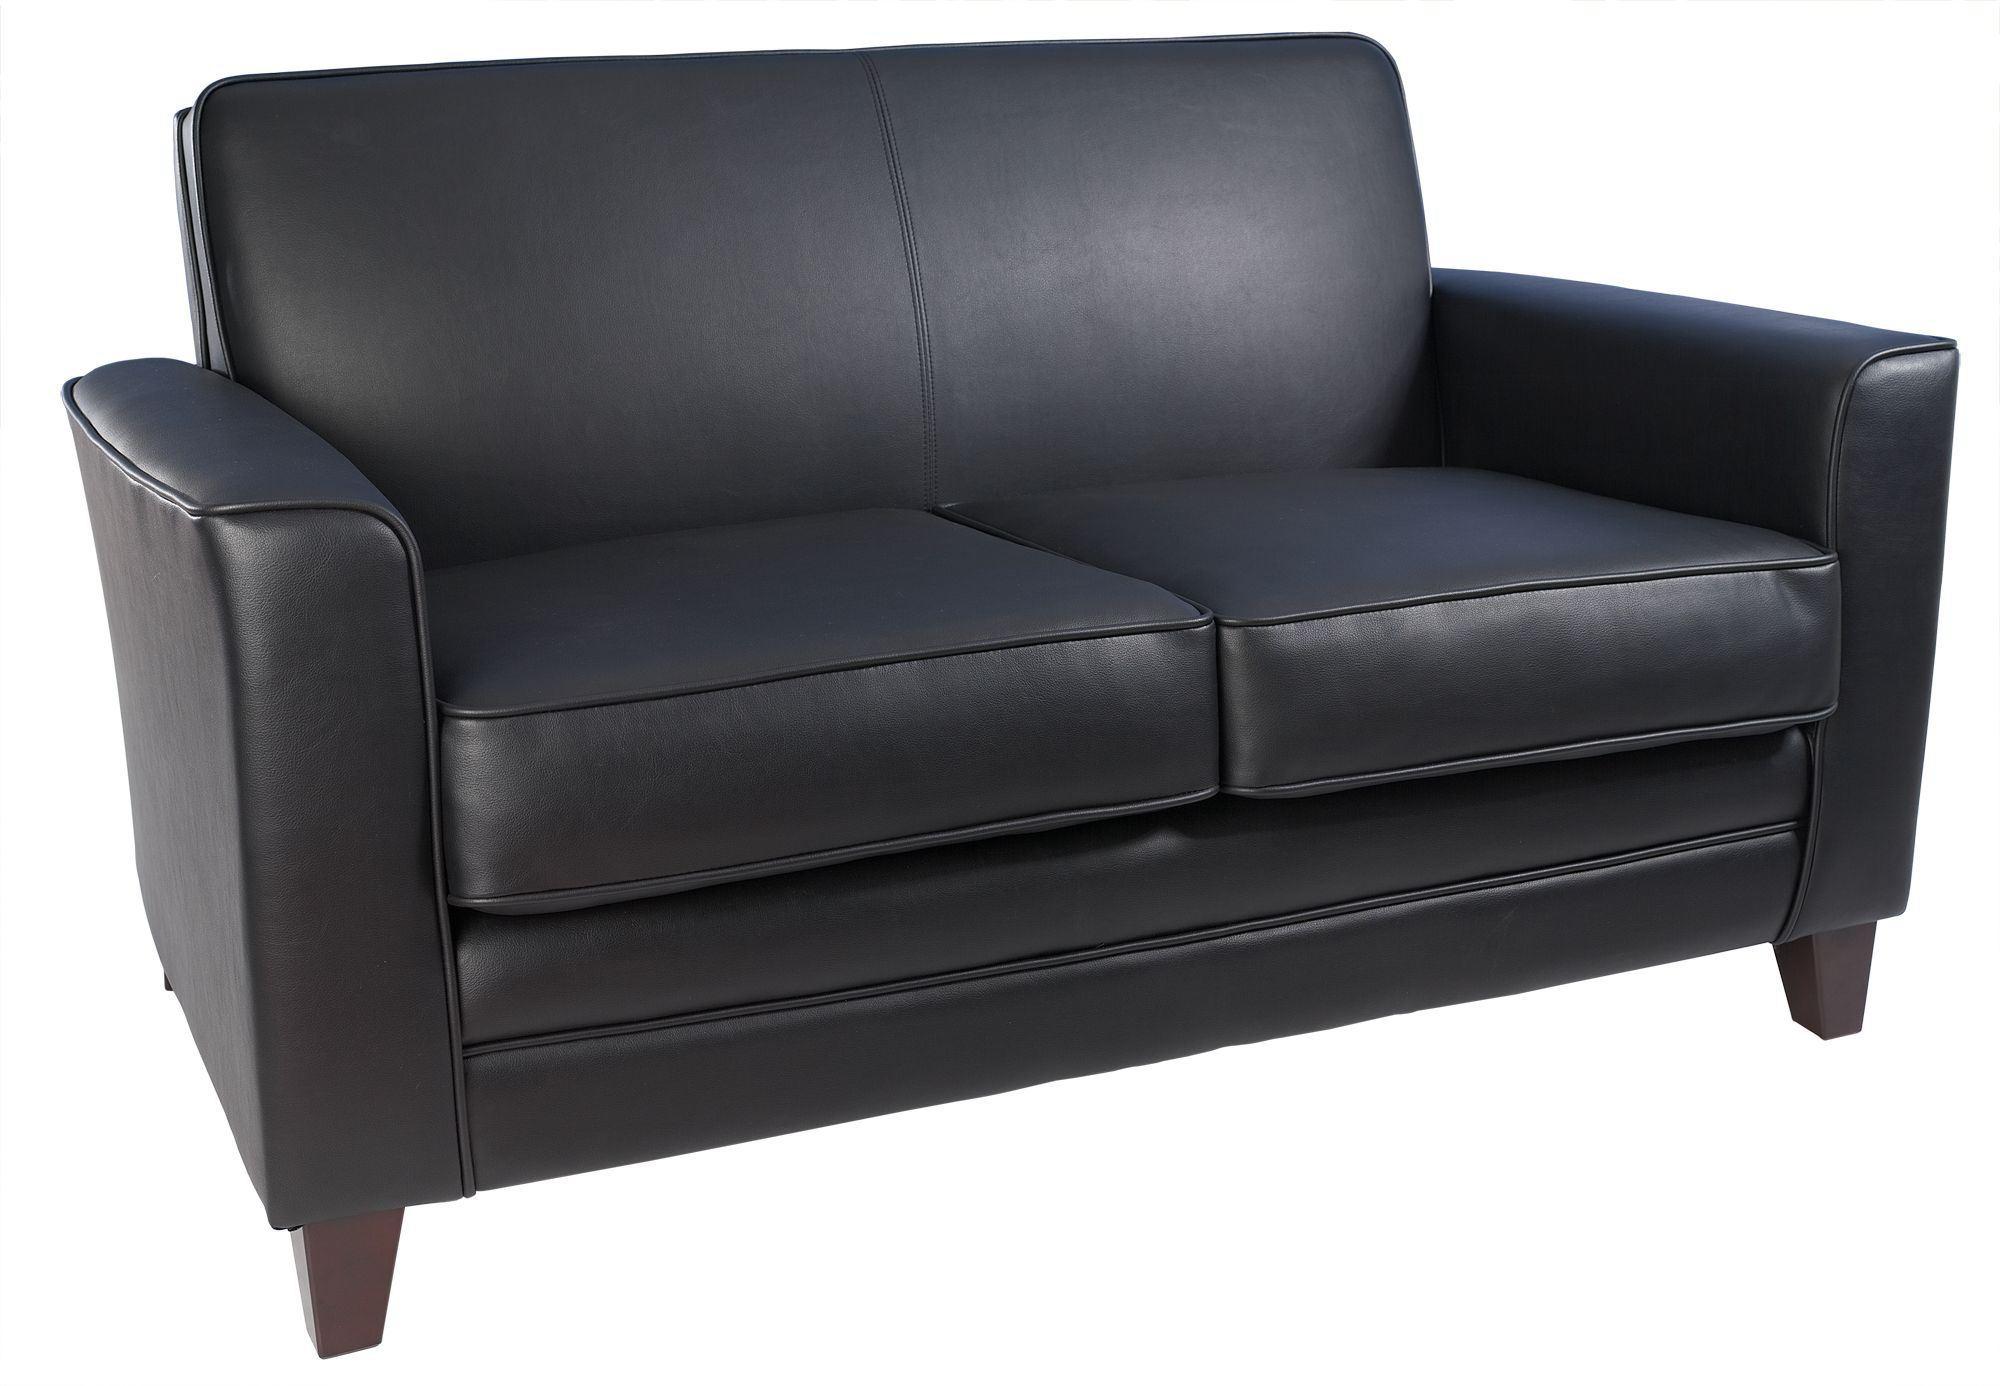 Newport leather sofa - image 1